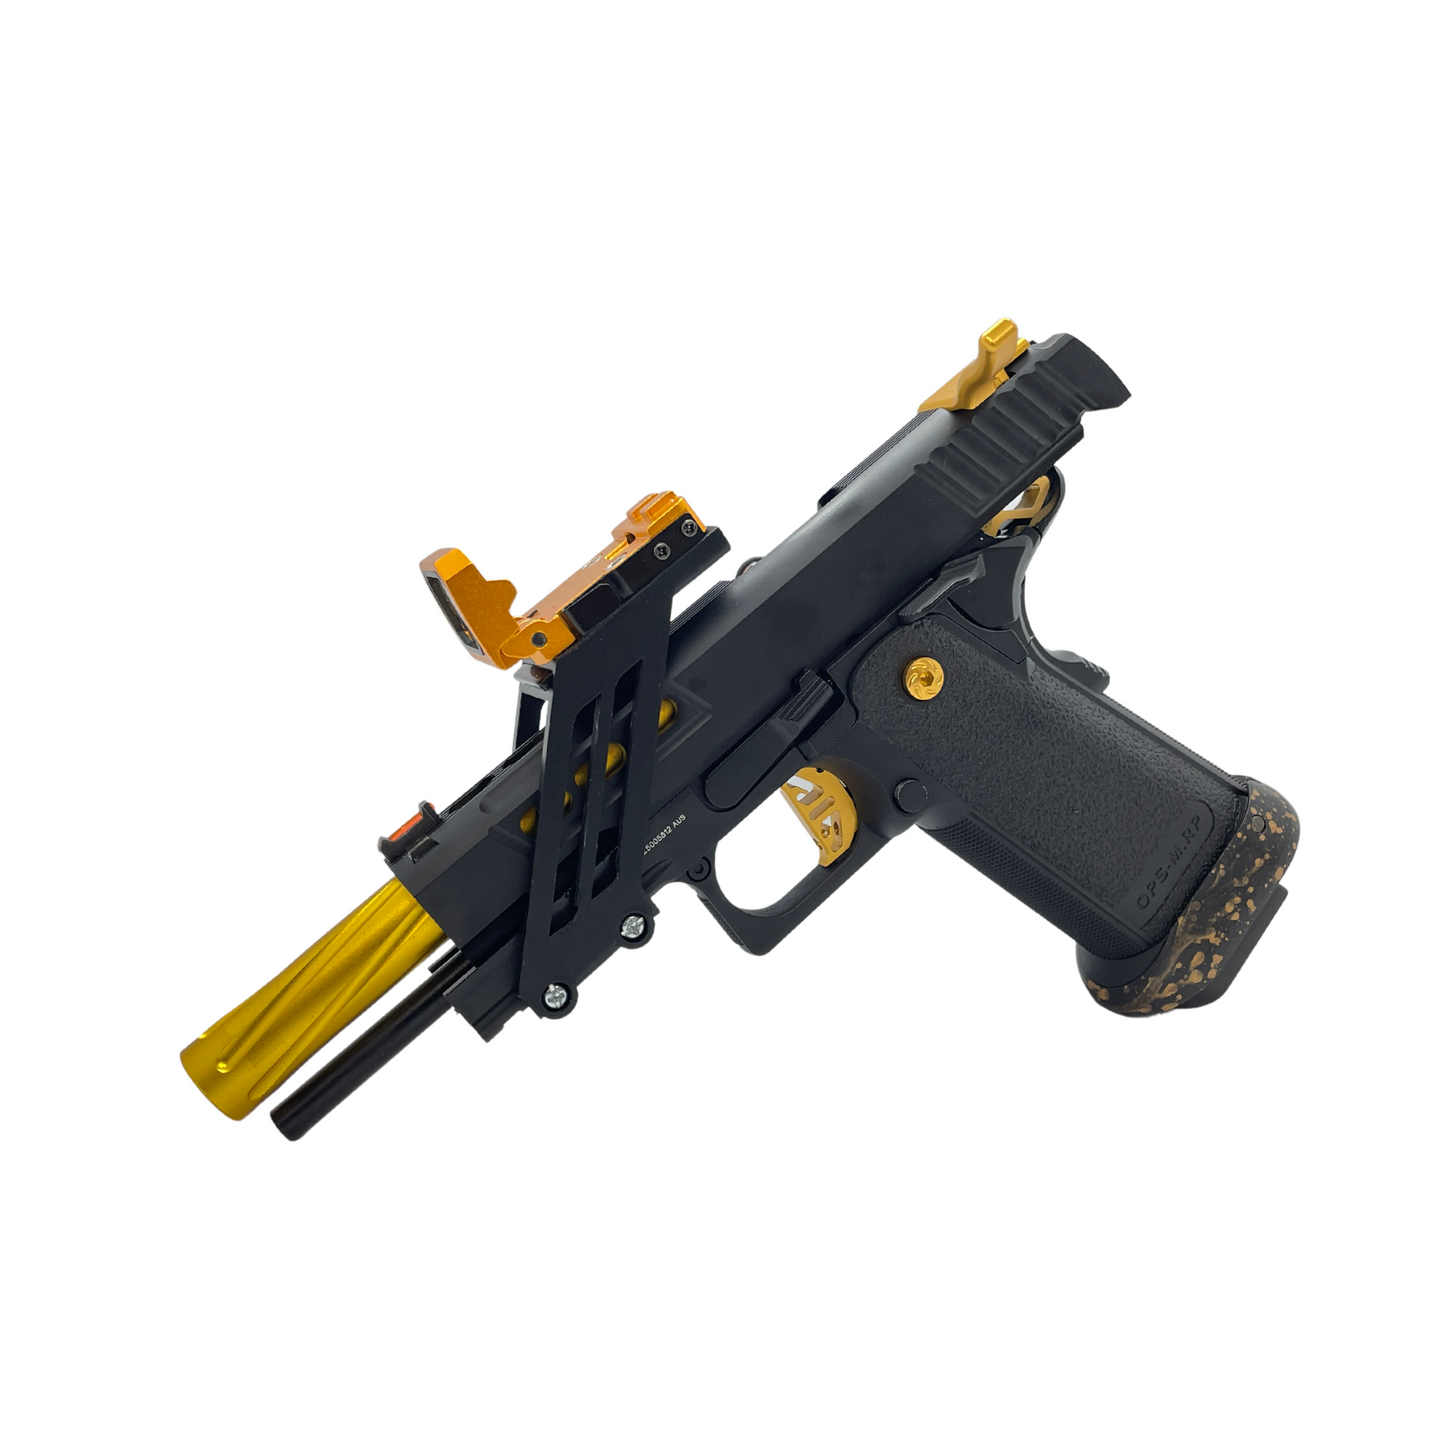 "Sly Shooter" G/E Hi-Capa 5.1 Gas Pistol - Gel Blaster